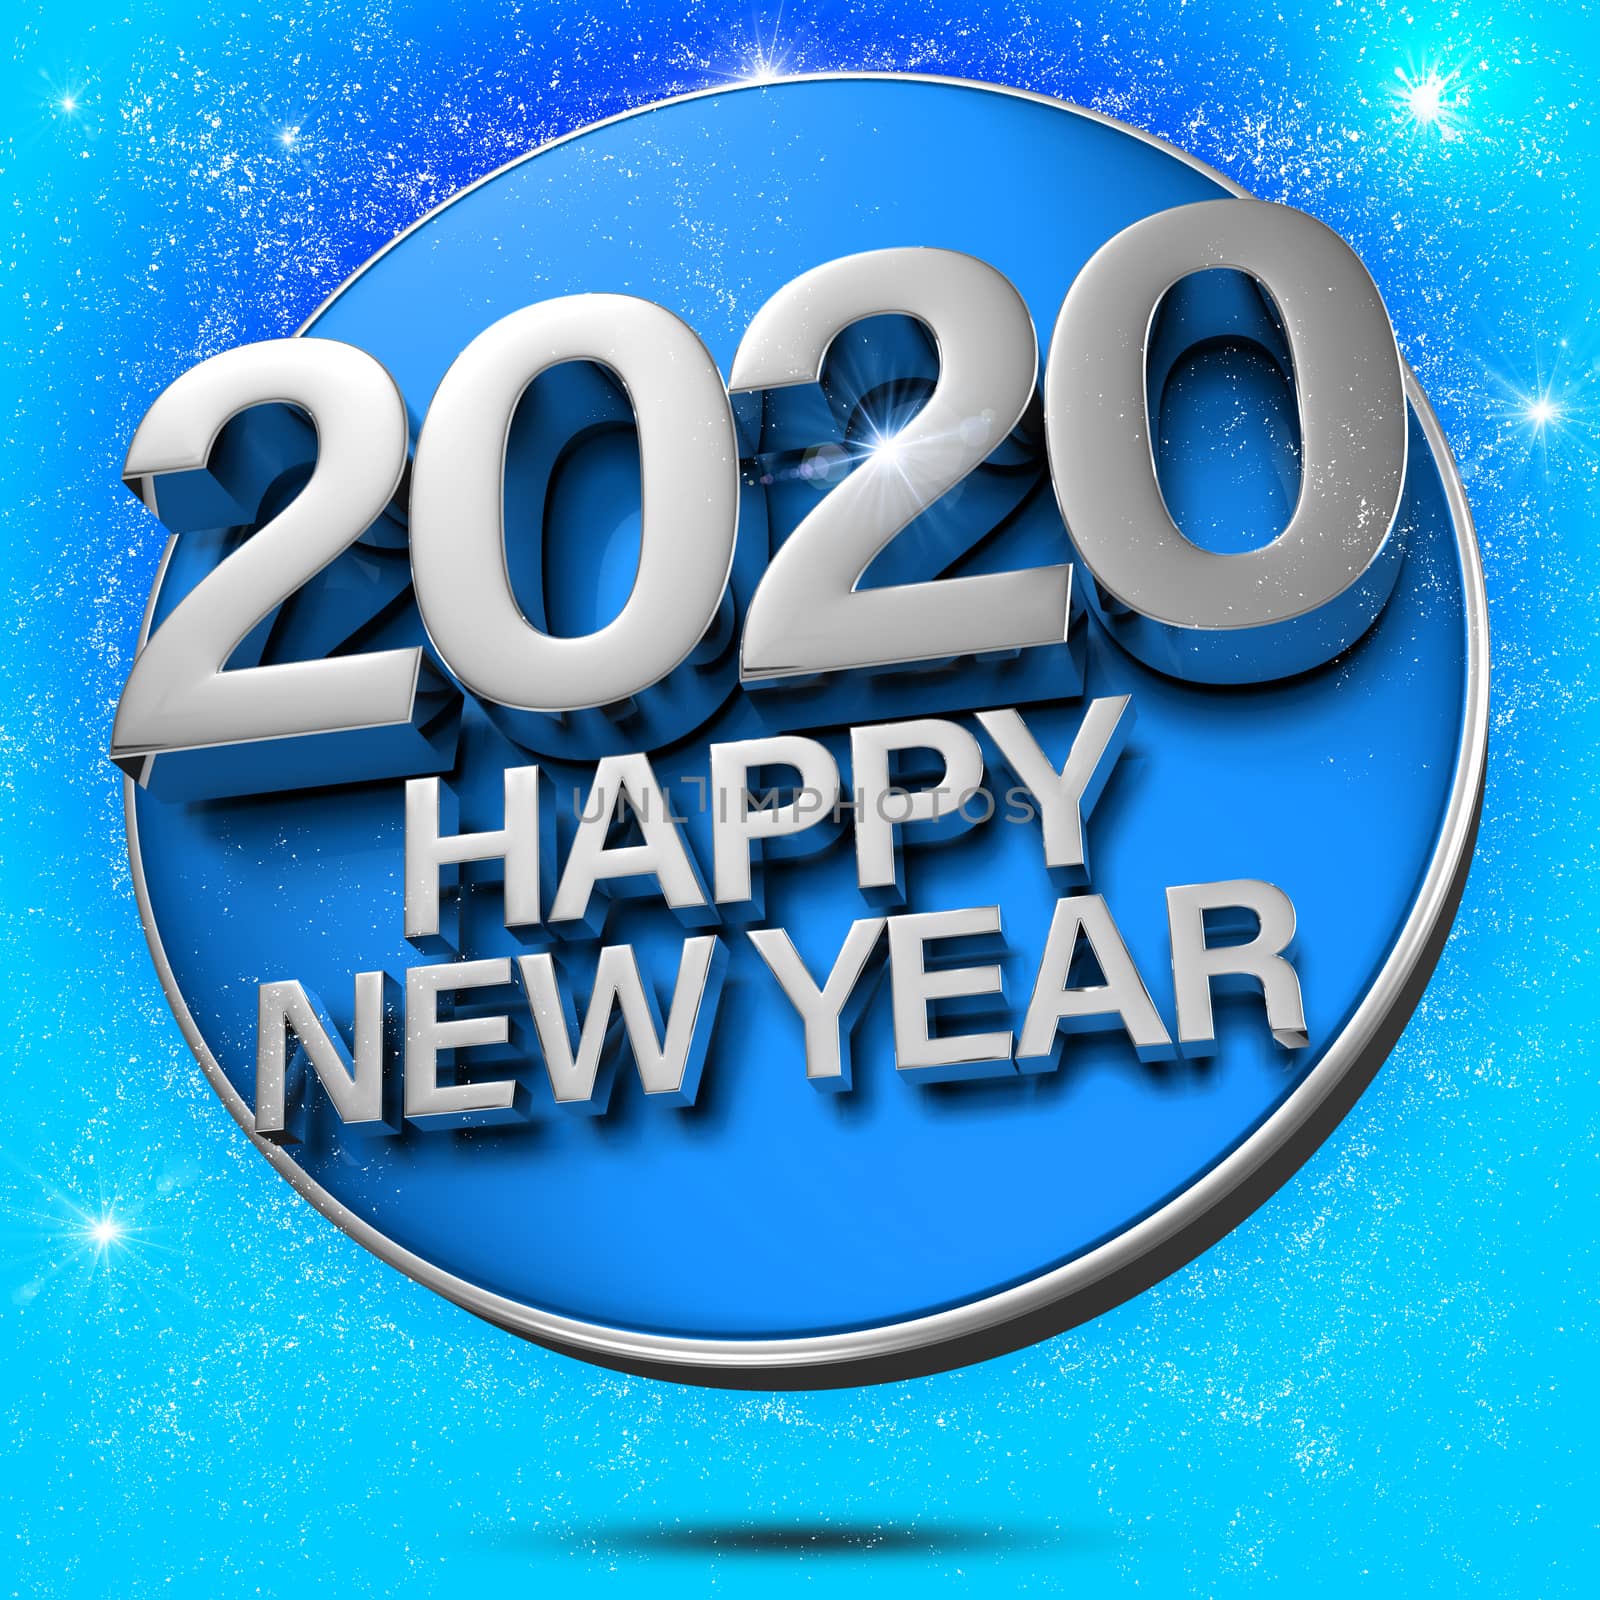 2020 3d rendering on a sparkling blue background.